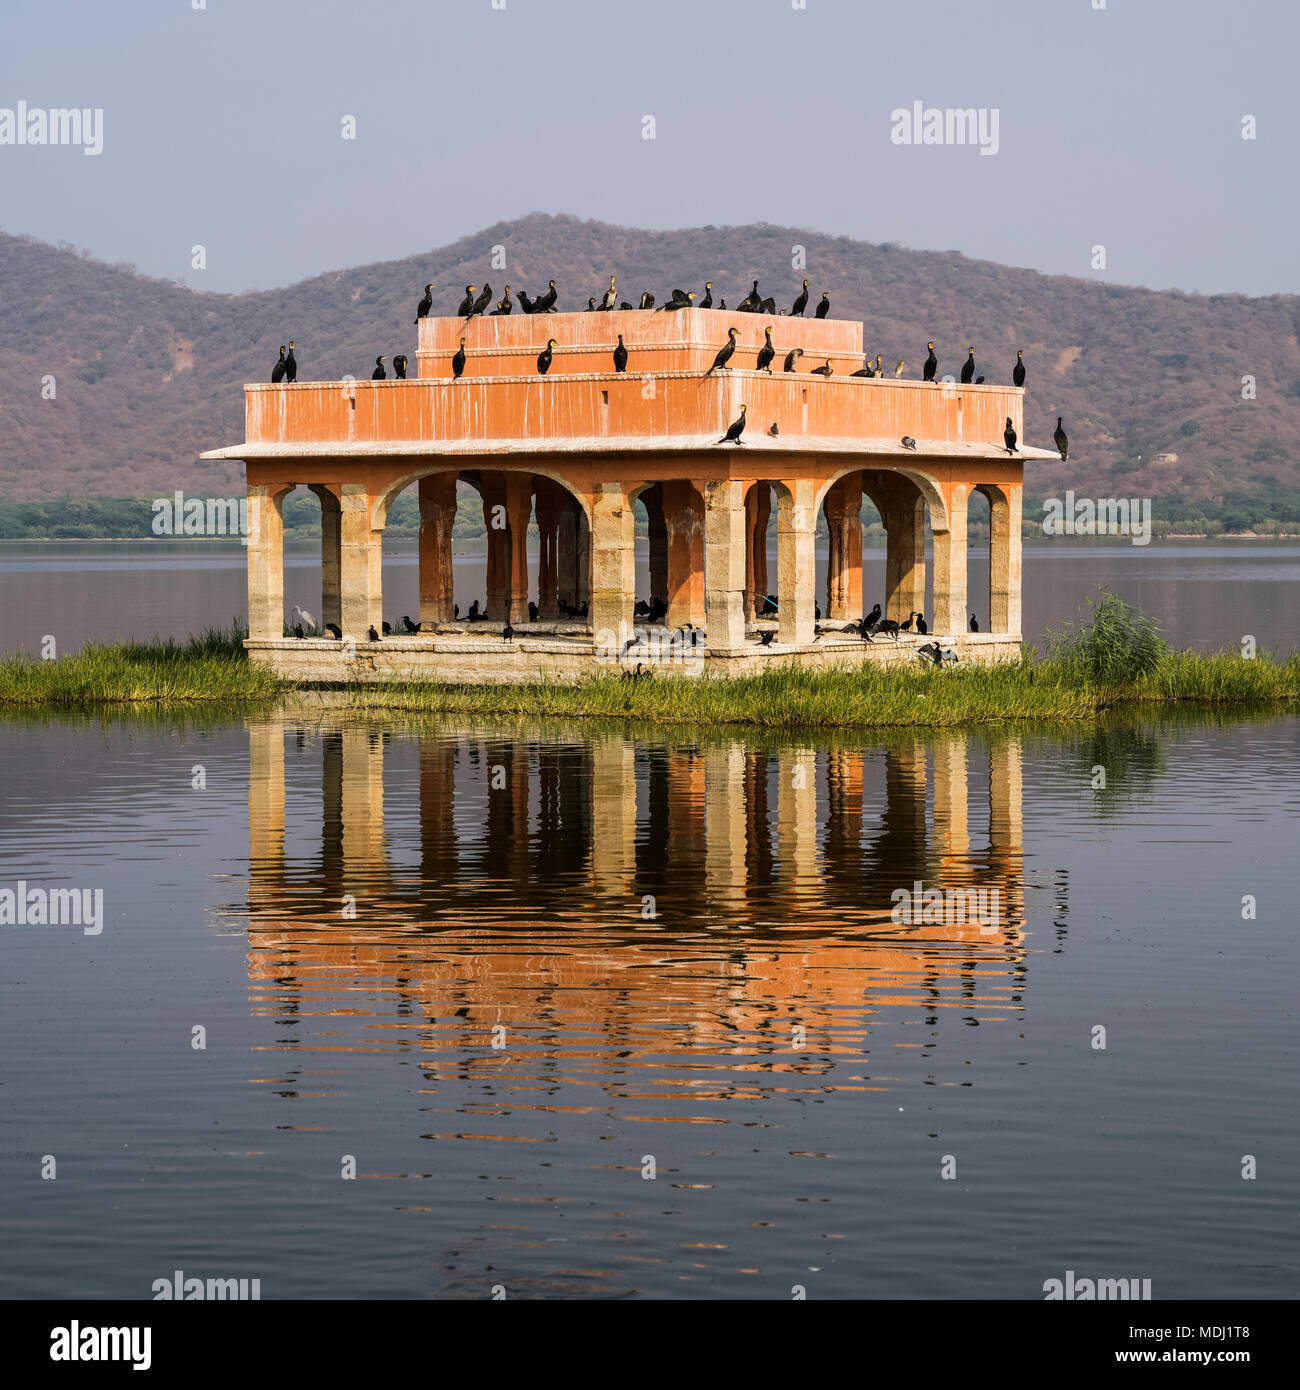 Jal Mahal Palace eingetaucht in die FIRMA MAN SUGAR See mit Vögel auf Es thront, Jaipur, Rajasthan, Indien Stockfoto